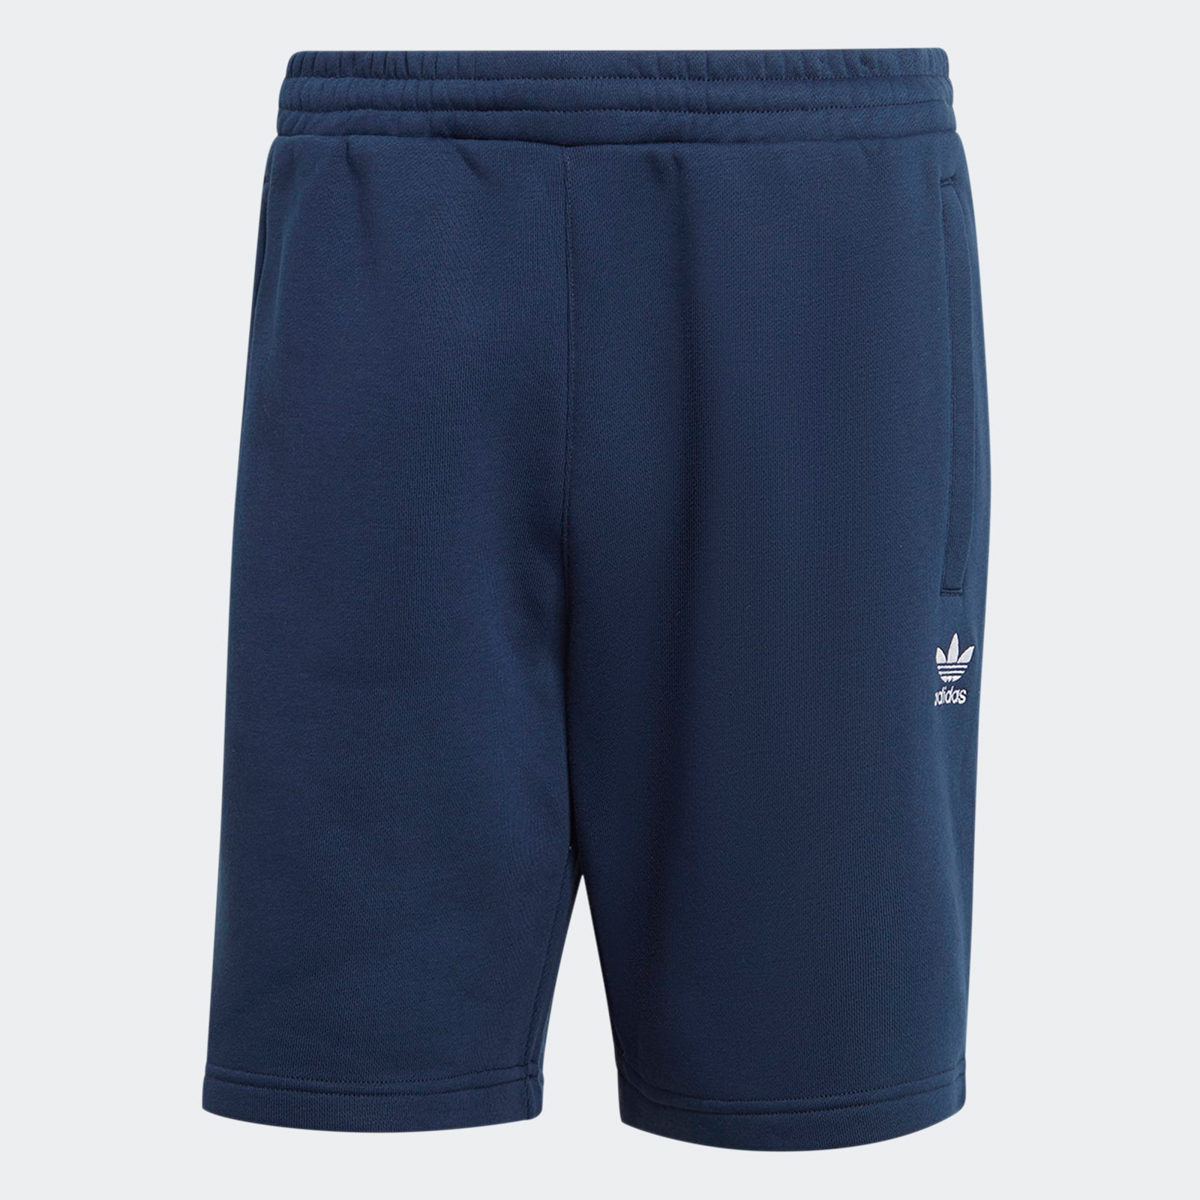 adidas-Trefoil-Essentials-Shorts-Indigo-Navy-Blue-1